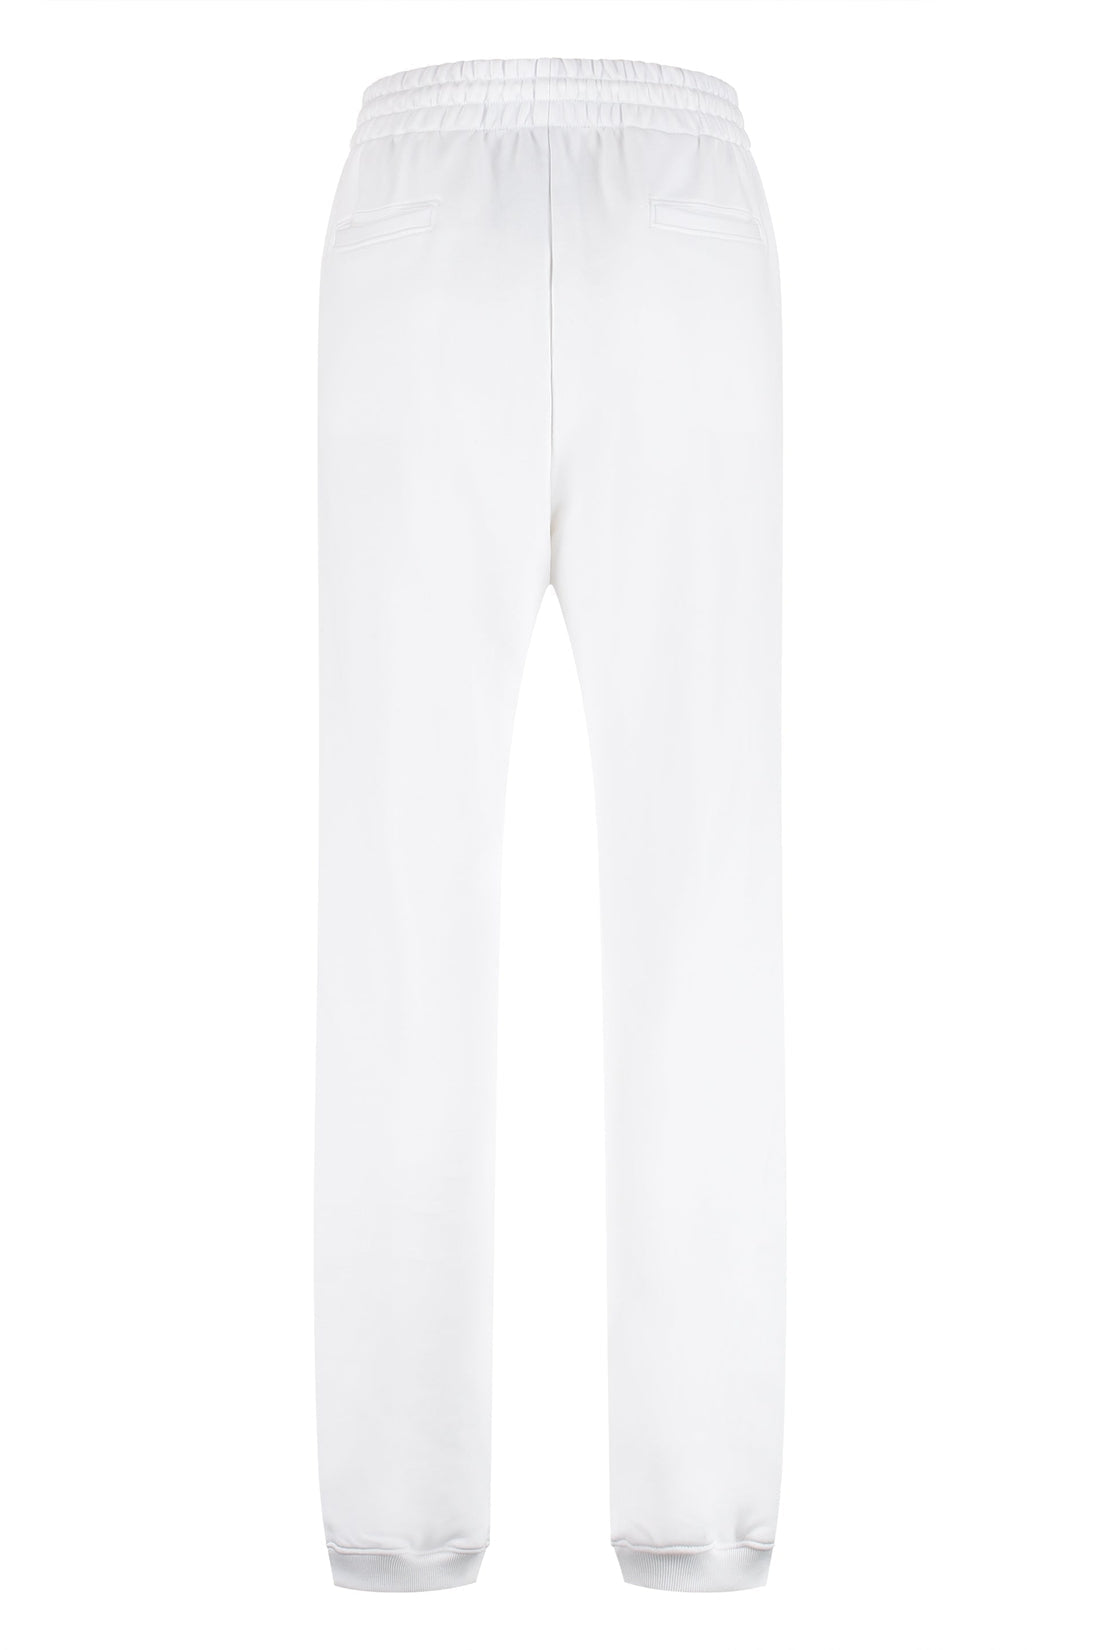 Moschino-OUTLET-SALE-Logo detail cotton track-pants-ARCHIVIST